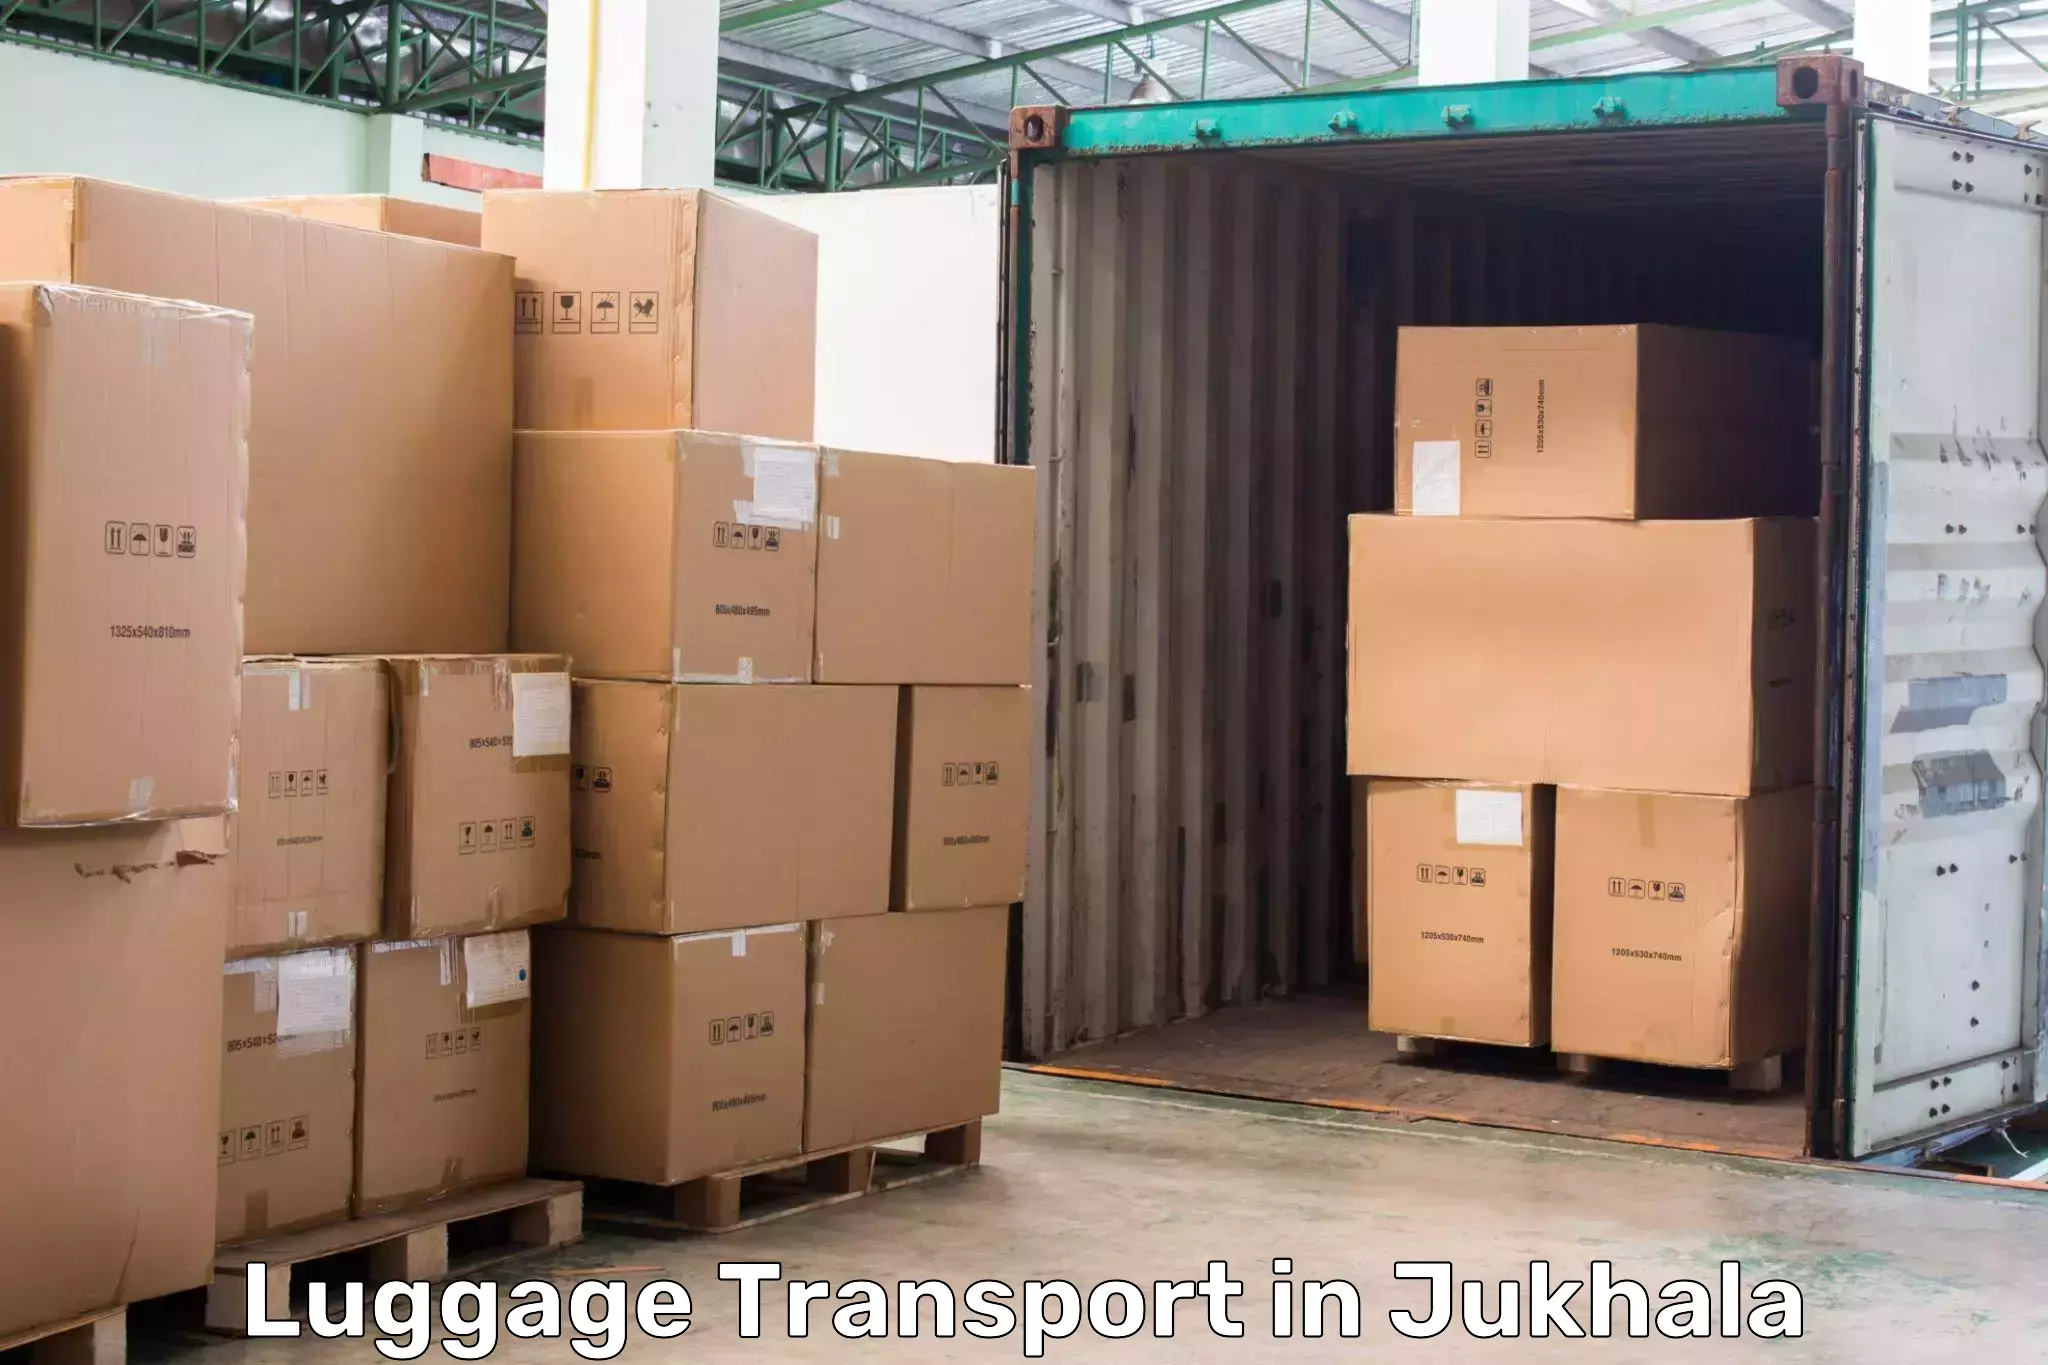 Automated luggage transport in Jukhala